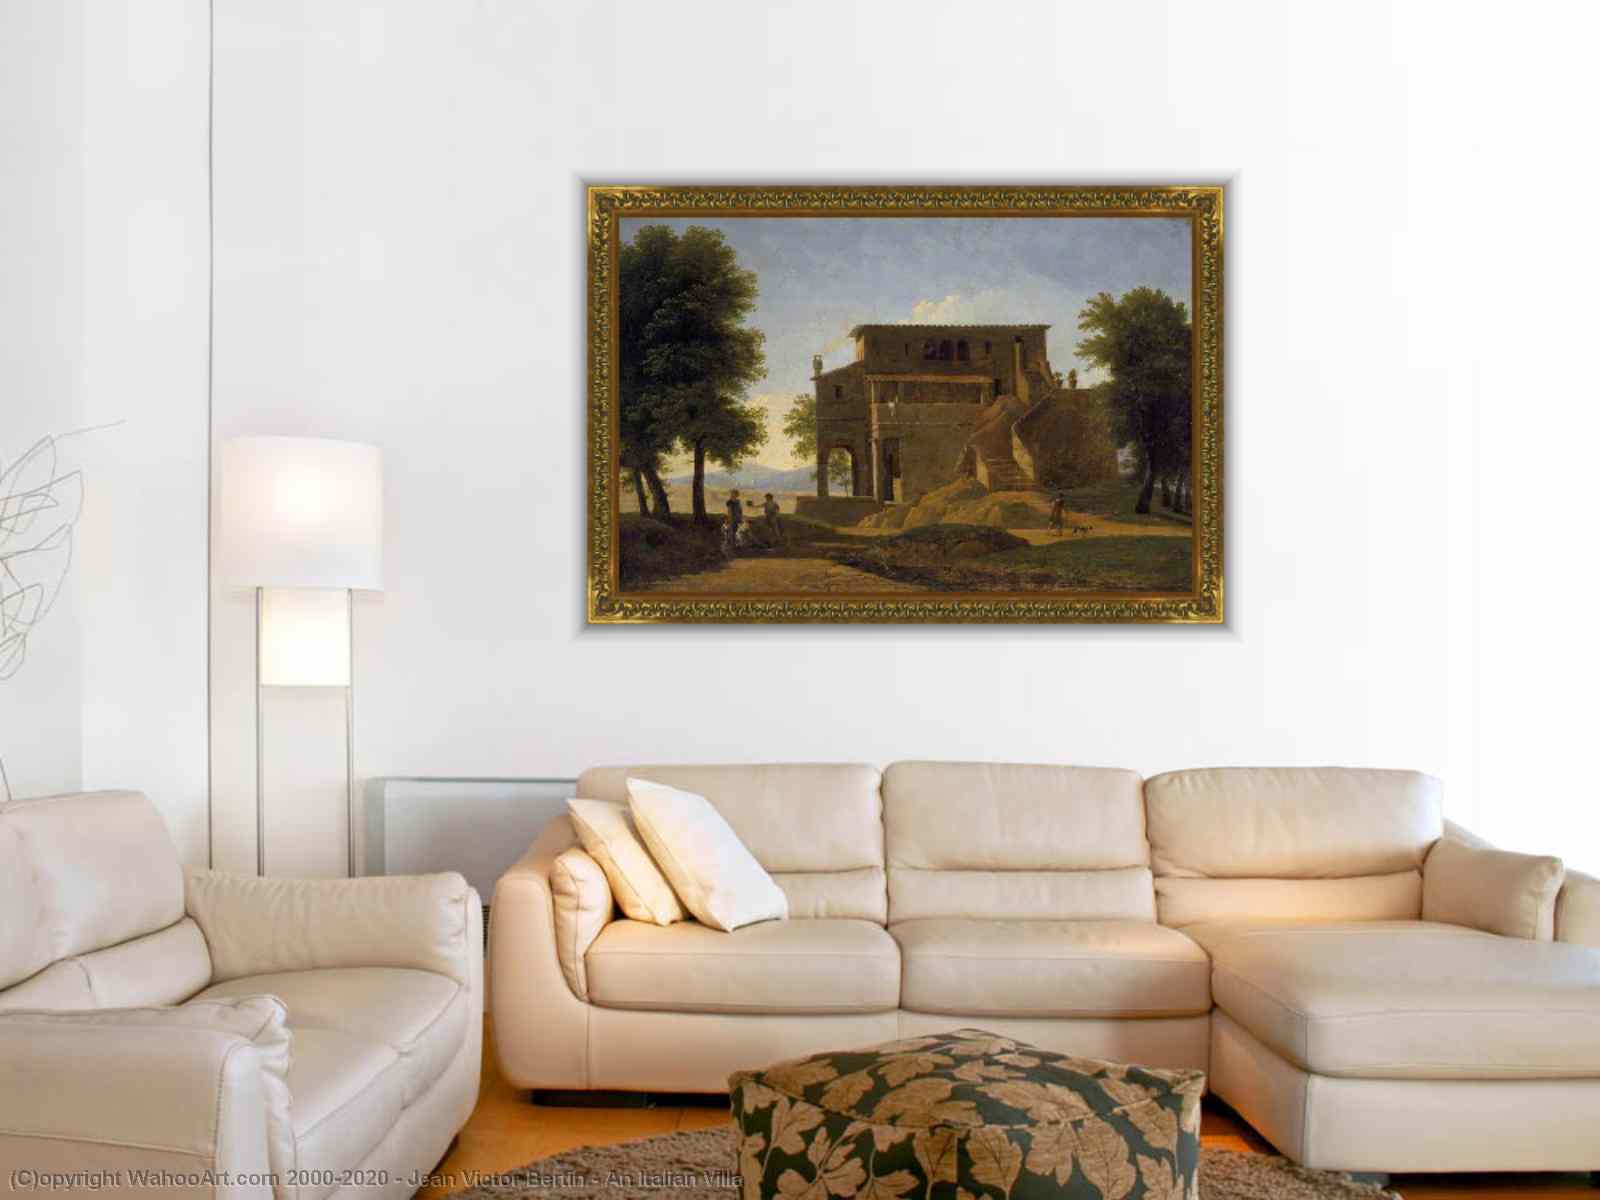 Oil Painting Replica An Italian Villa by Jean Victor Bertin (1767-1842,  France)